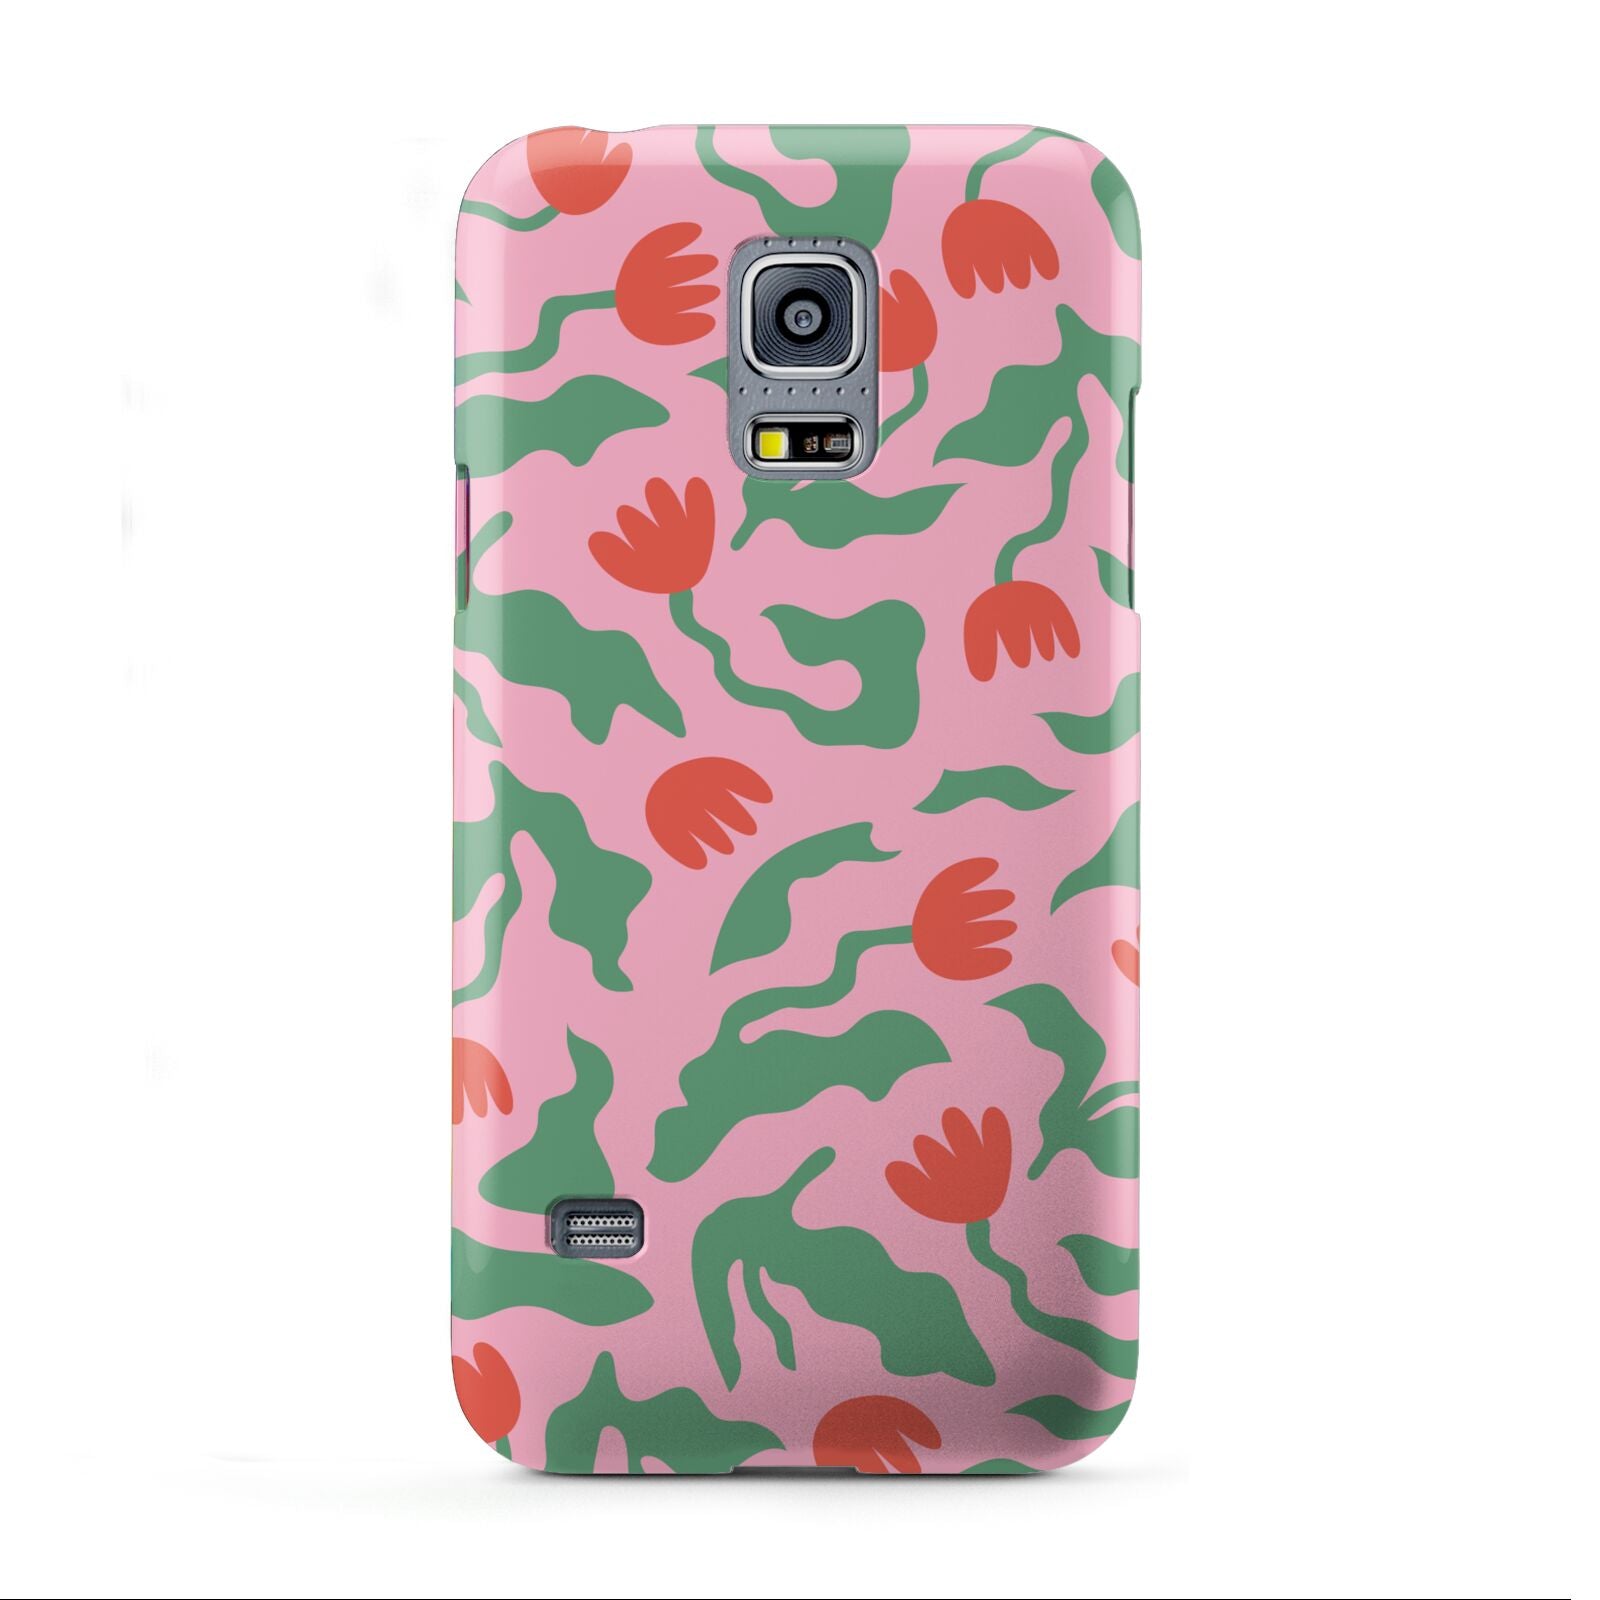 Simple Floral Samsung Galaxy S5 Mini Case